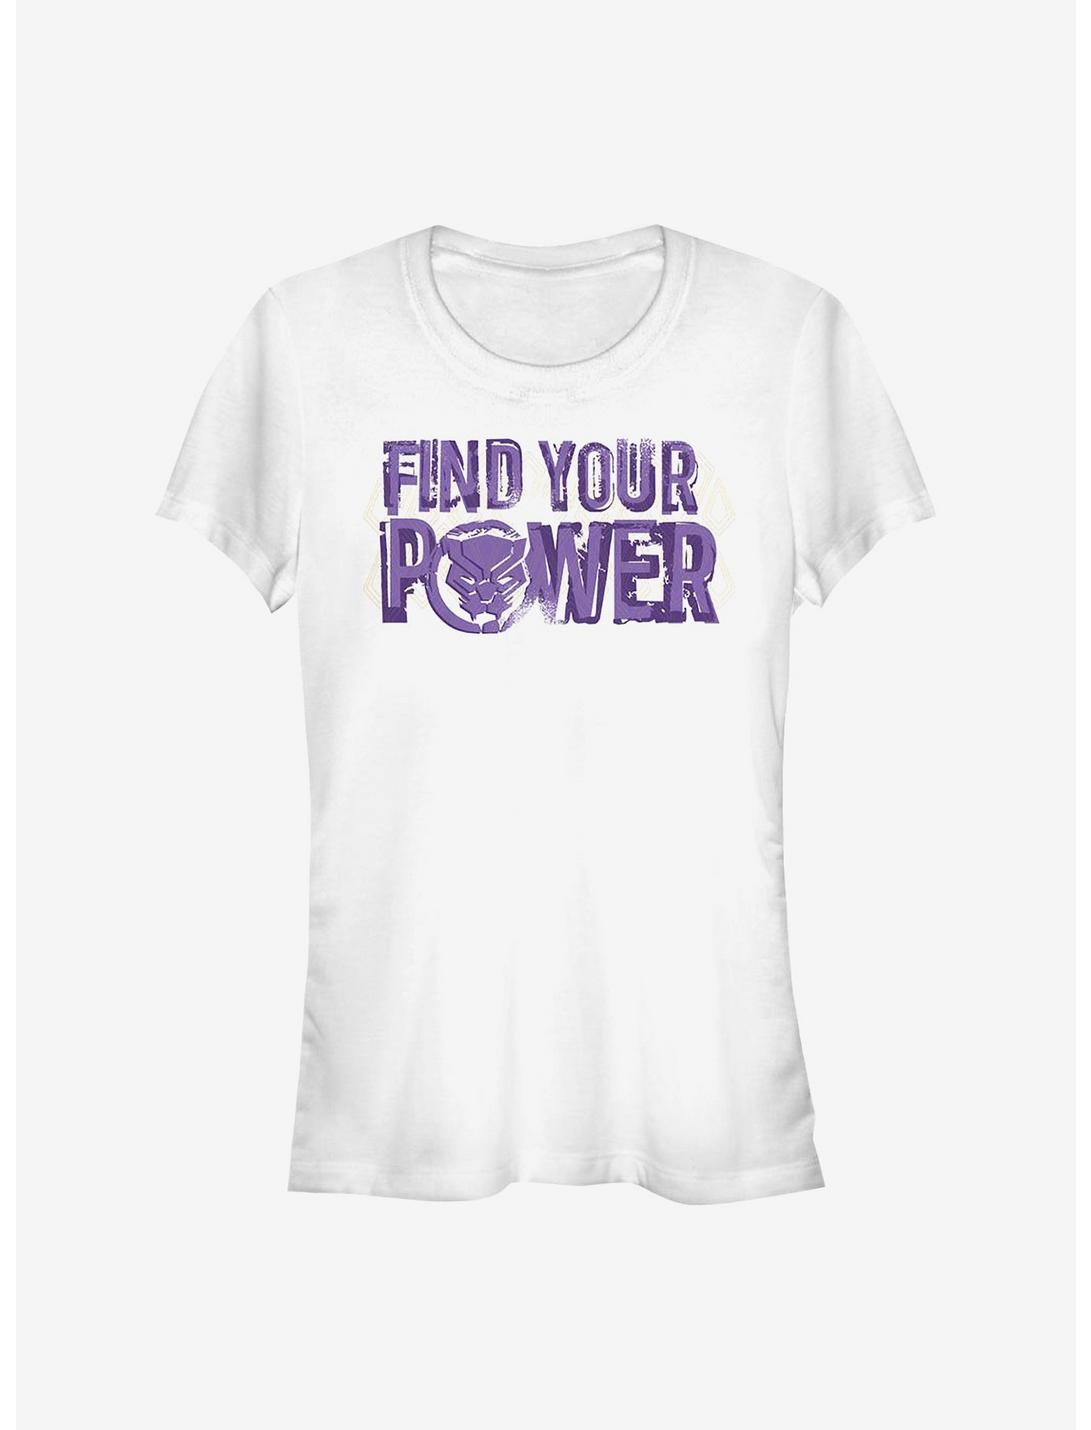 Marvel Black Panther Power Girls T-Shirt, WHITE, hi-res